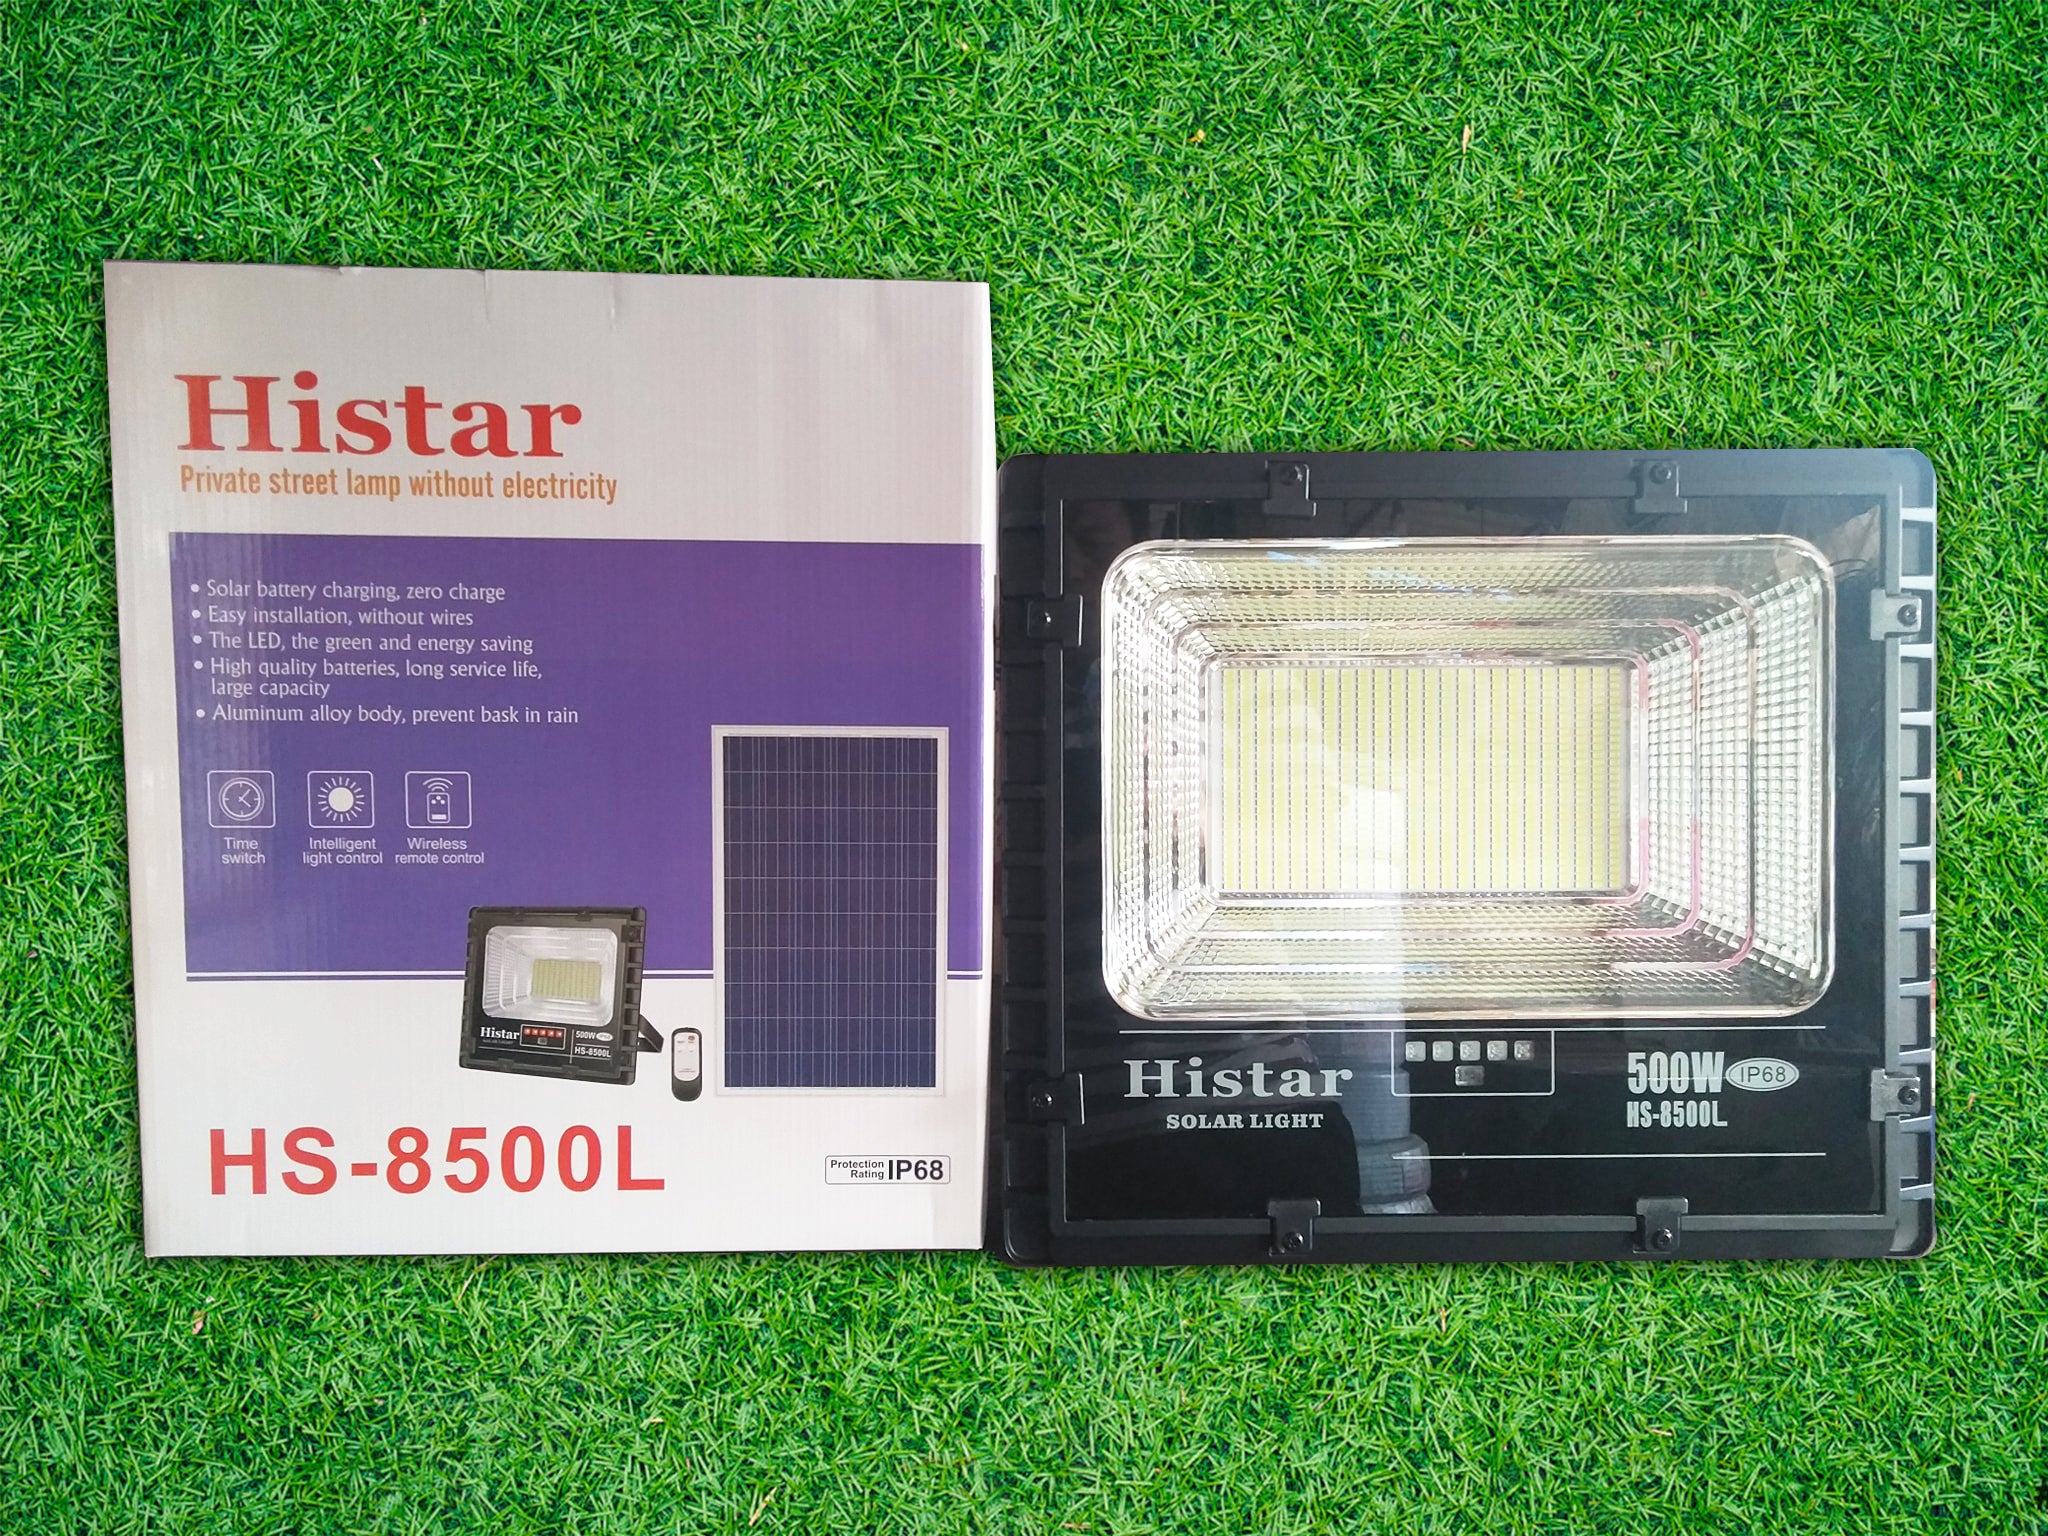 HS-8500L Histar Solar Private street lamp